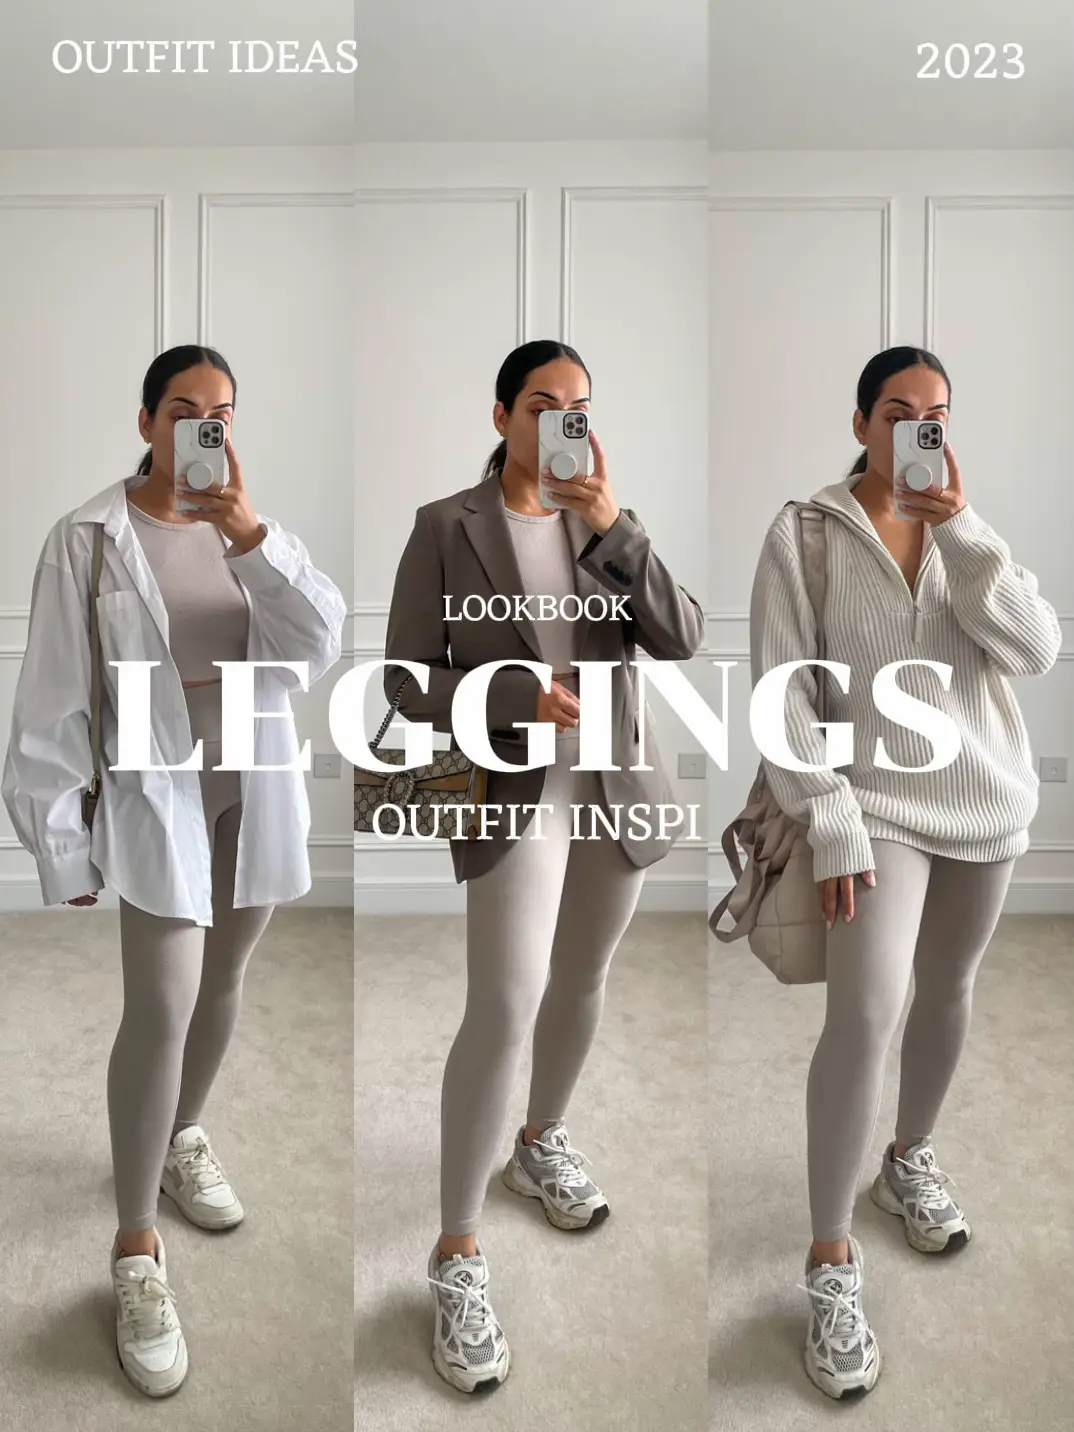 3 ways to style beige leggings, Gallery posted by zarabentleyy